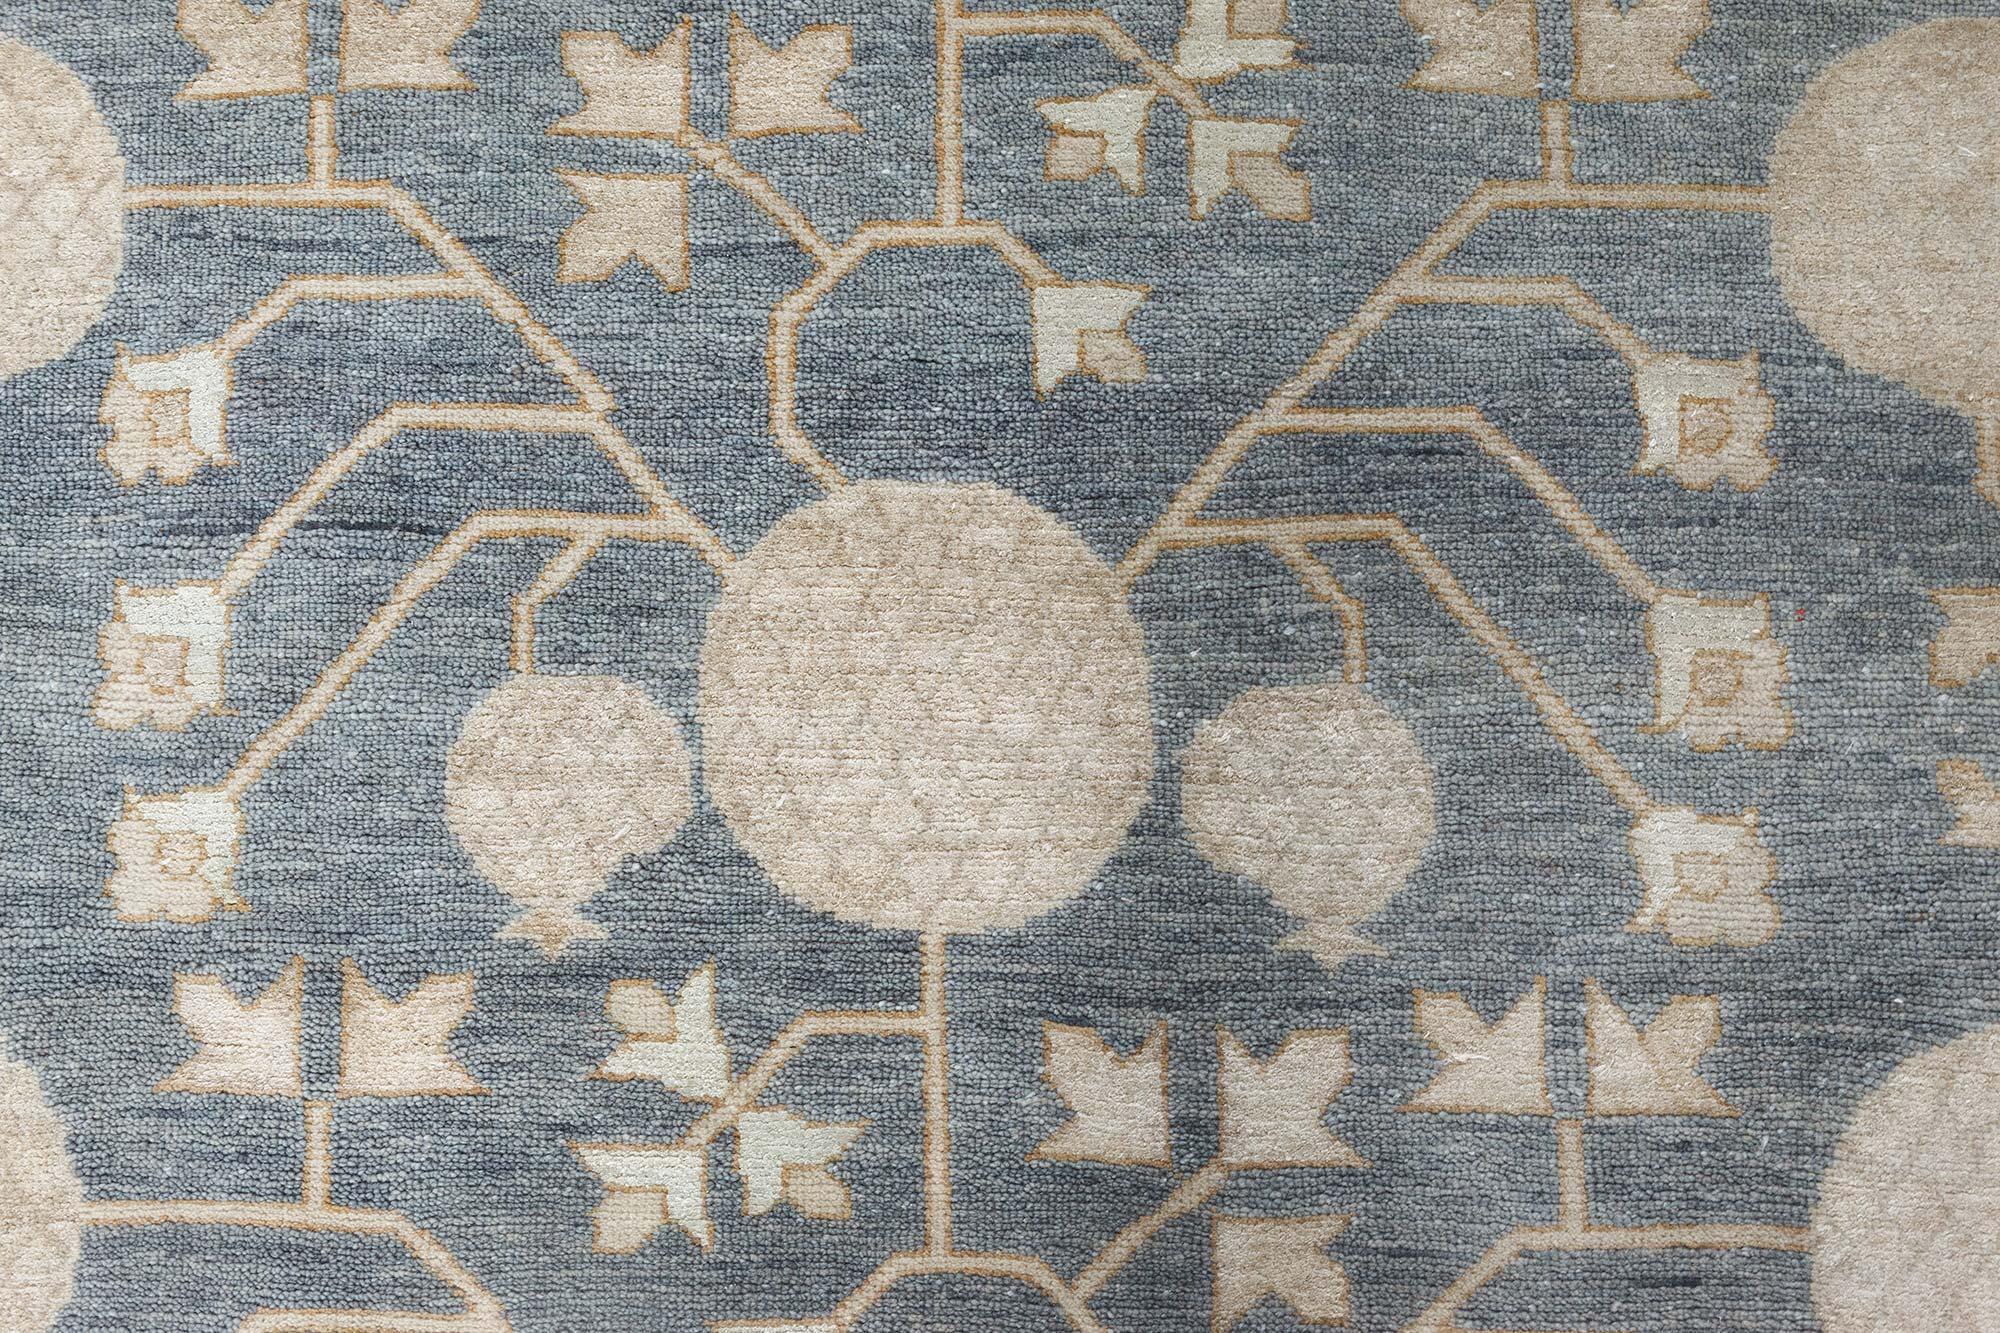 Modern Samarkand style handmade rug by Doris Leslie Blau.
Size: 9'9